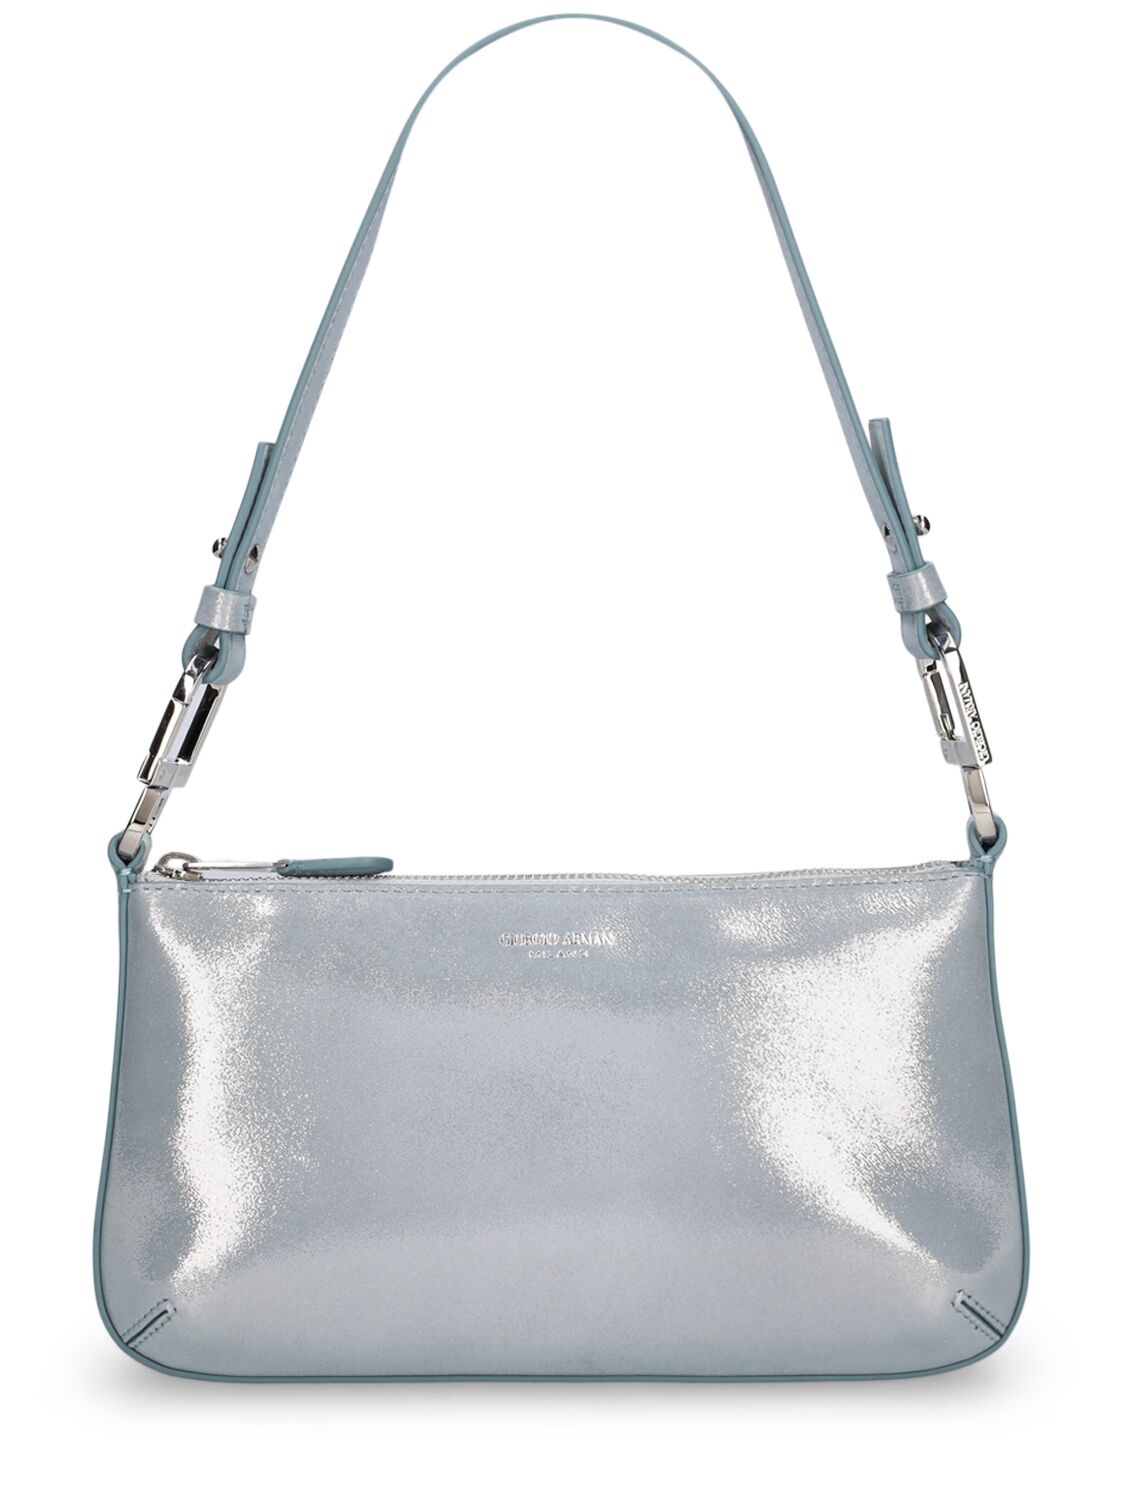 Giorgio Armani Small Shiny Leather Shoulder Bag In Metallic